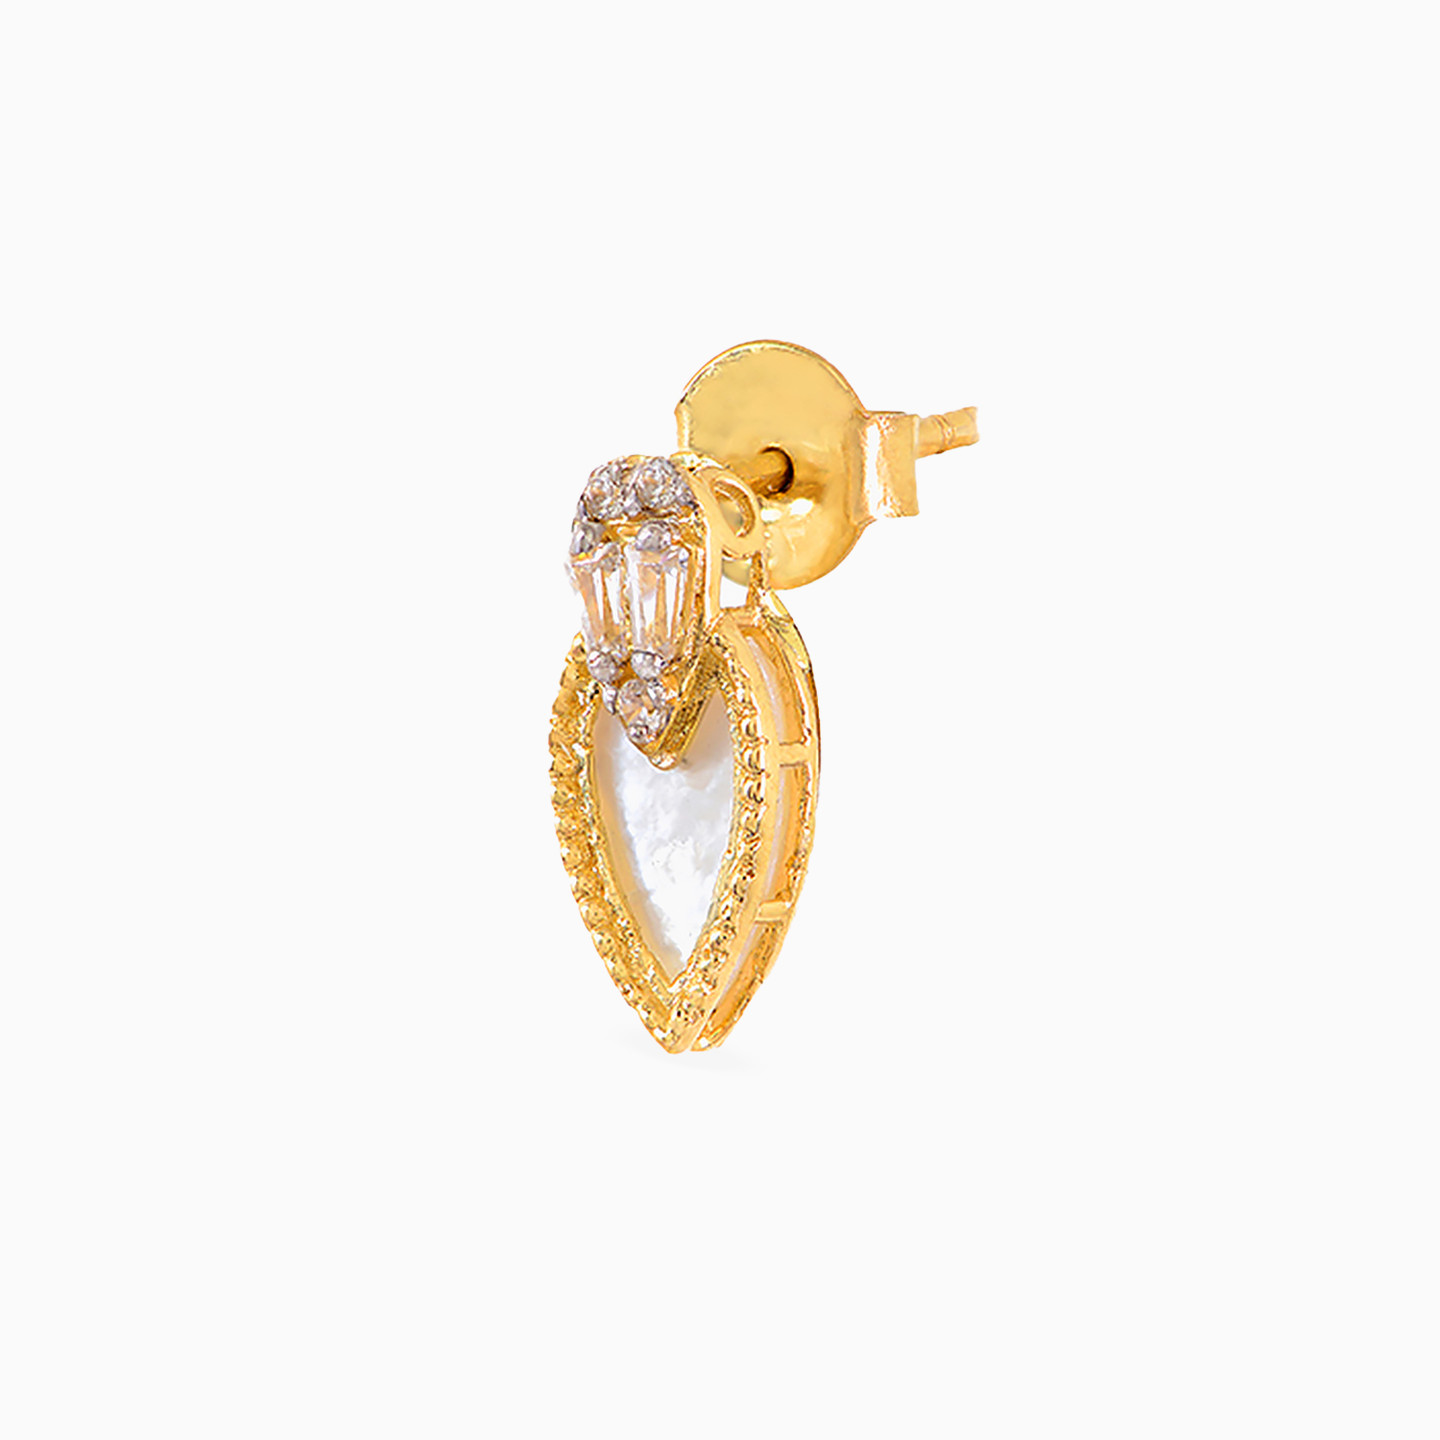 18K Gold Diamond & Colored Stones Stud Earrings - 3